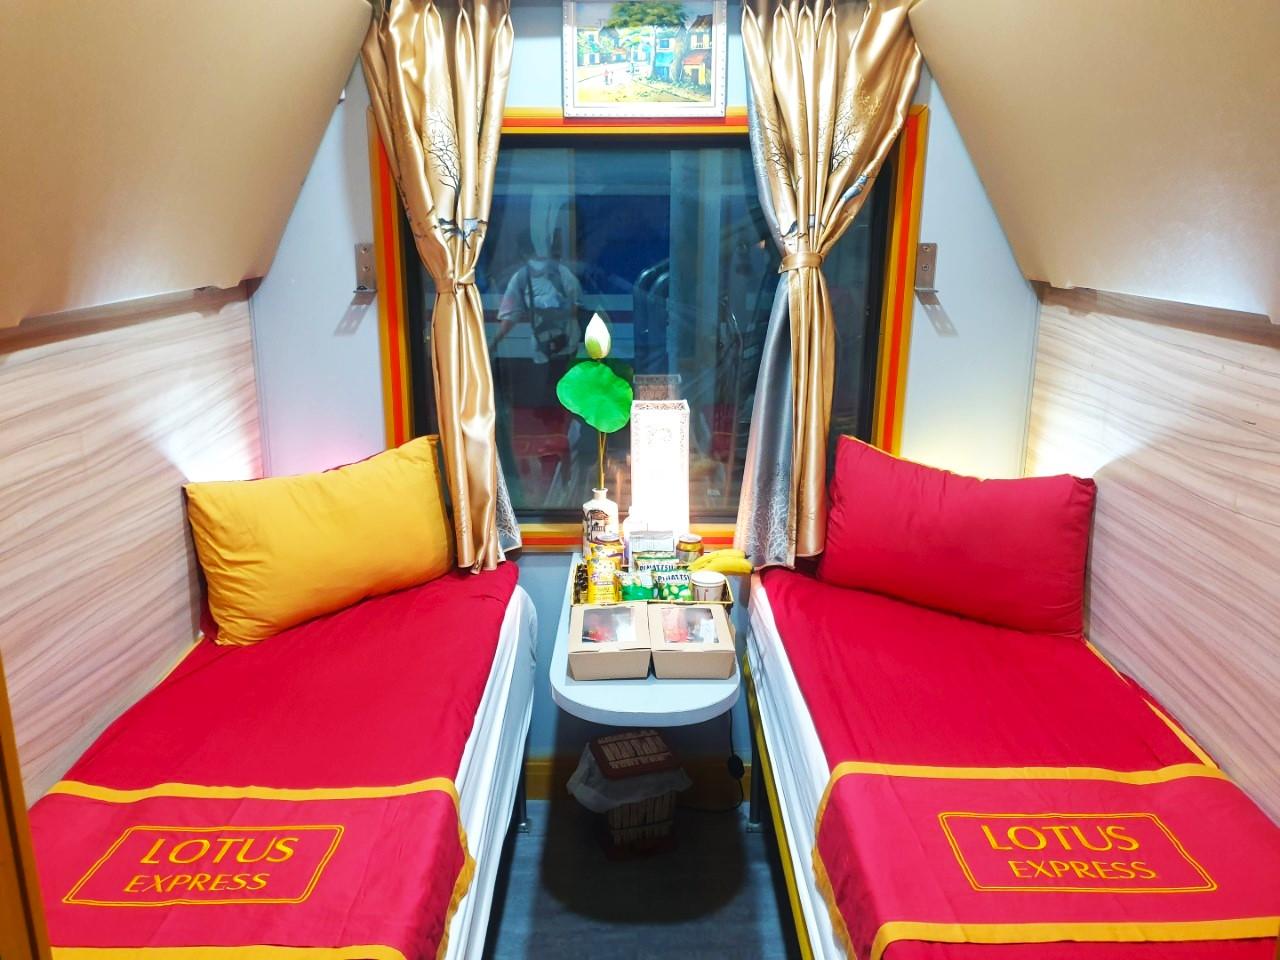 Ninh Binh - Dong Hoi in VIP 2 berth-cabin on SE19 (22h02 – 06h25) - Price per person not per cabin